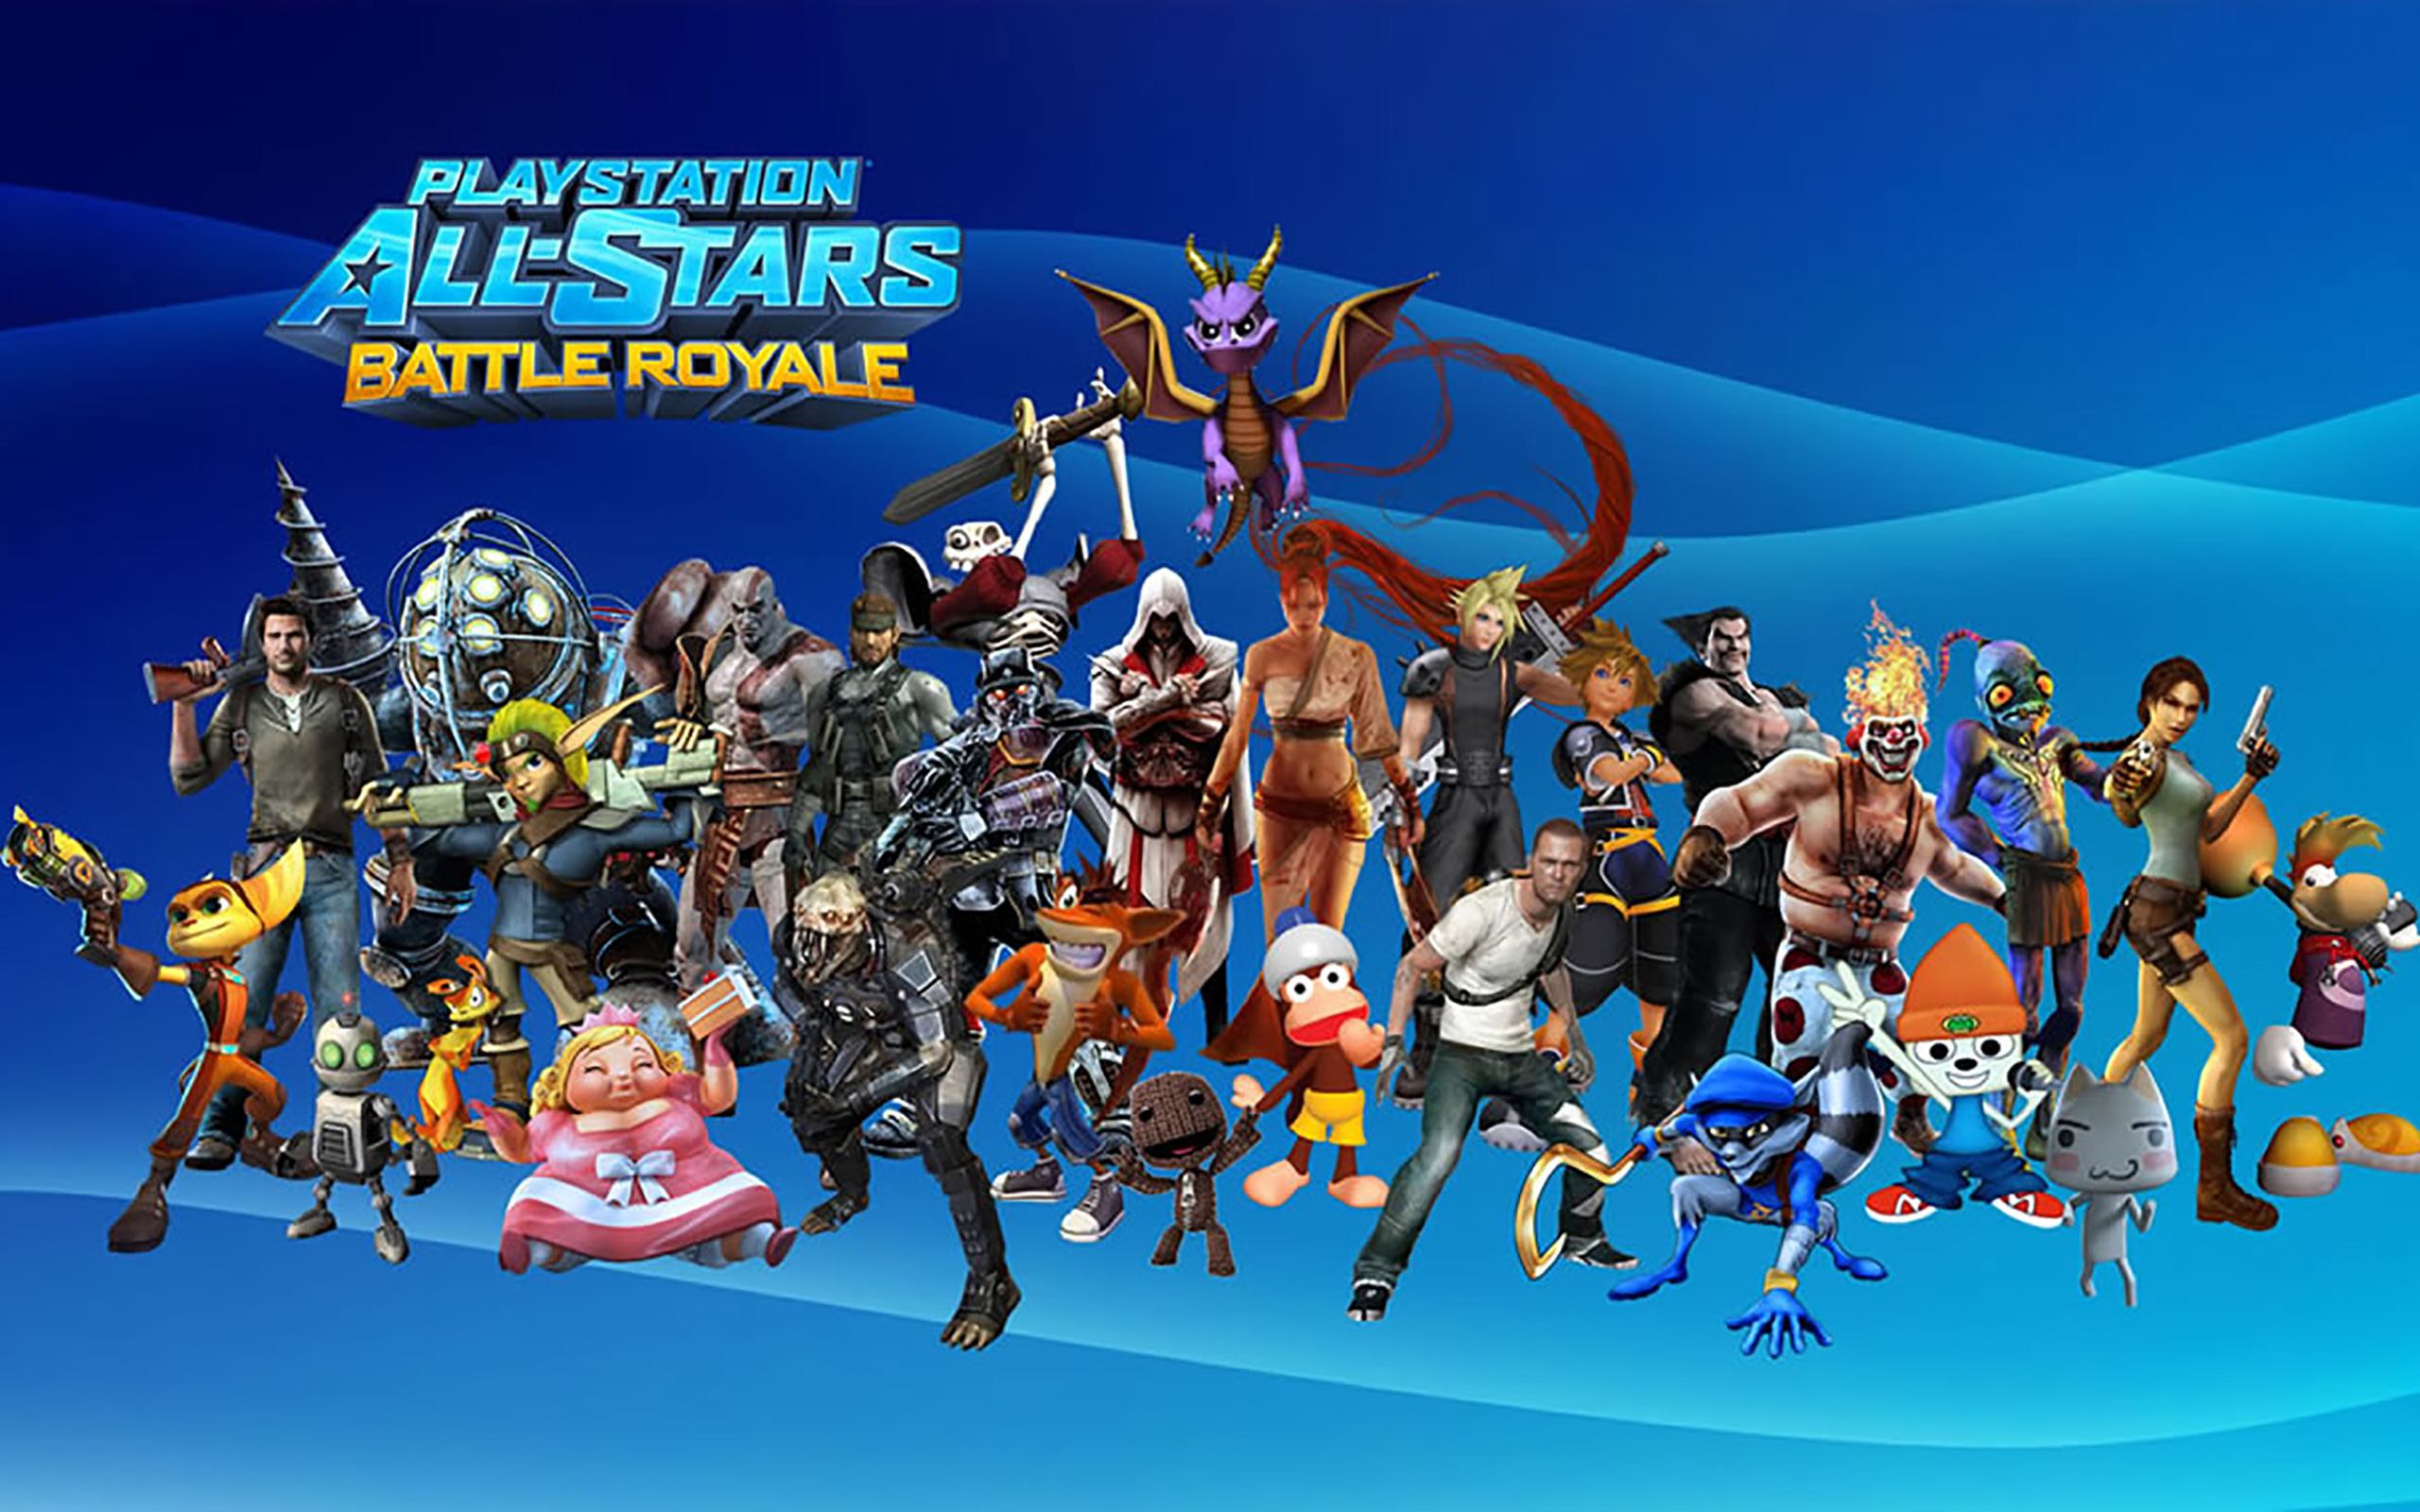 PlayStation All-Stars: Battle Royale / SuperBot Entertainment